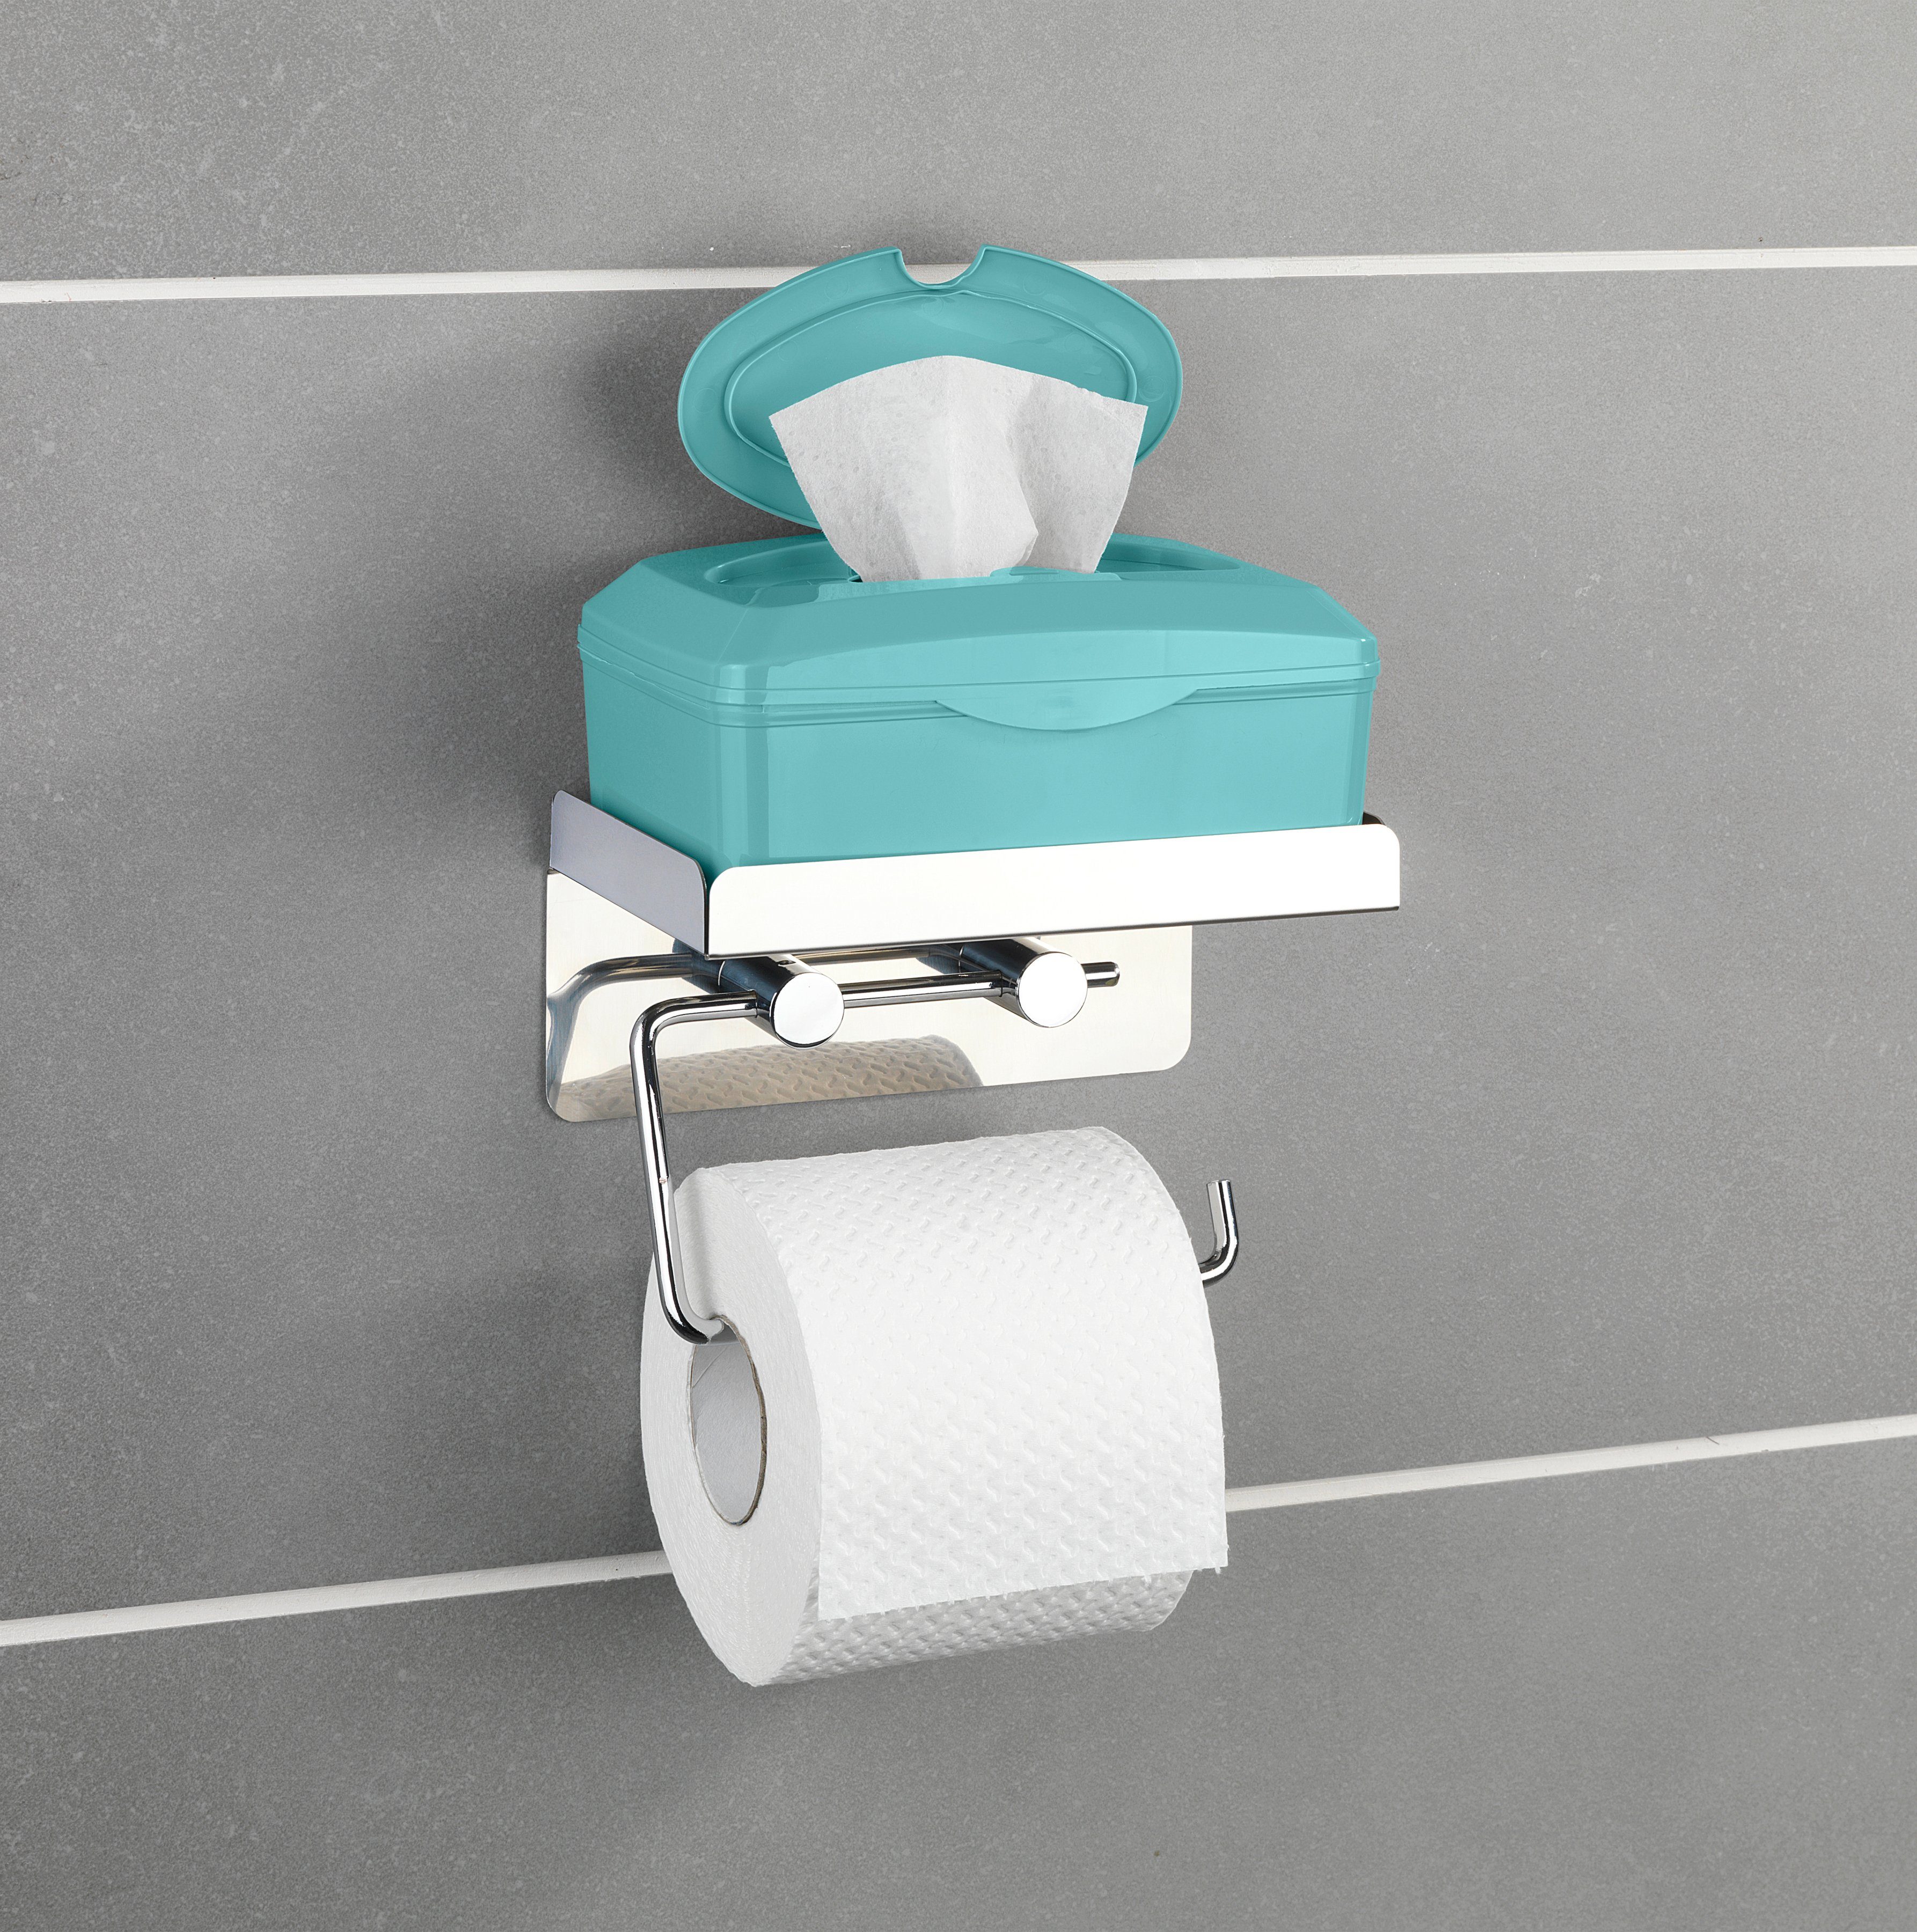 WENKO Toilettenpapierhalter, 2in1 Kombination